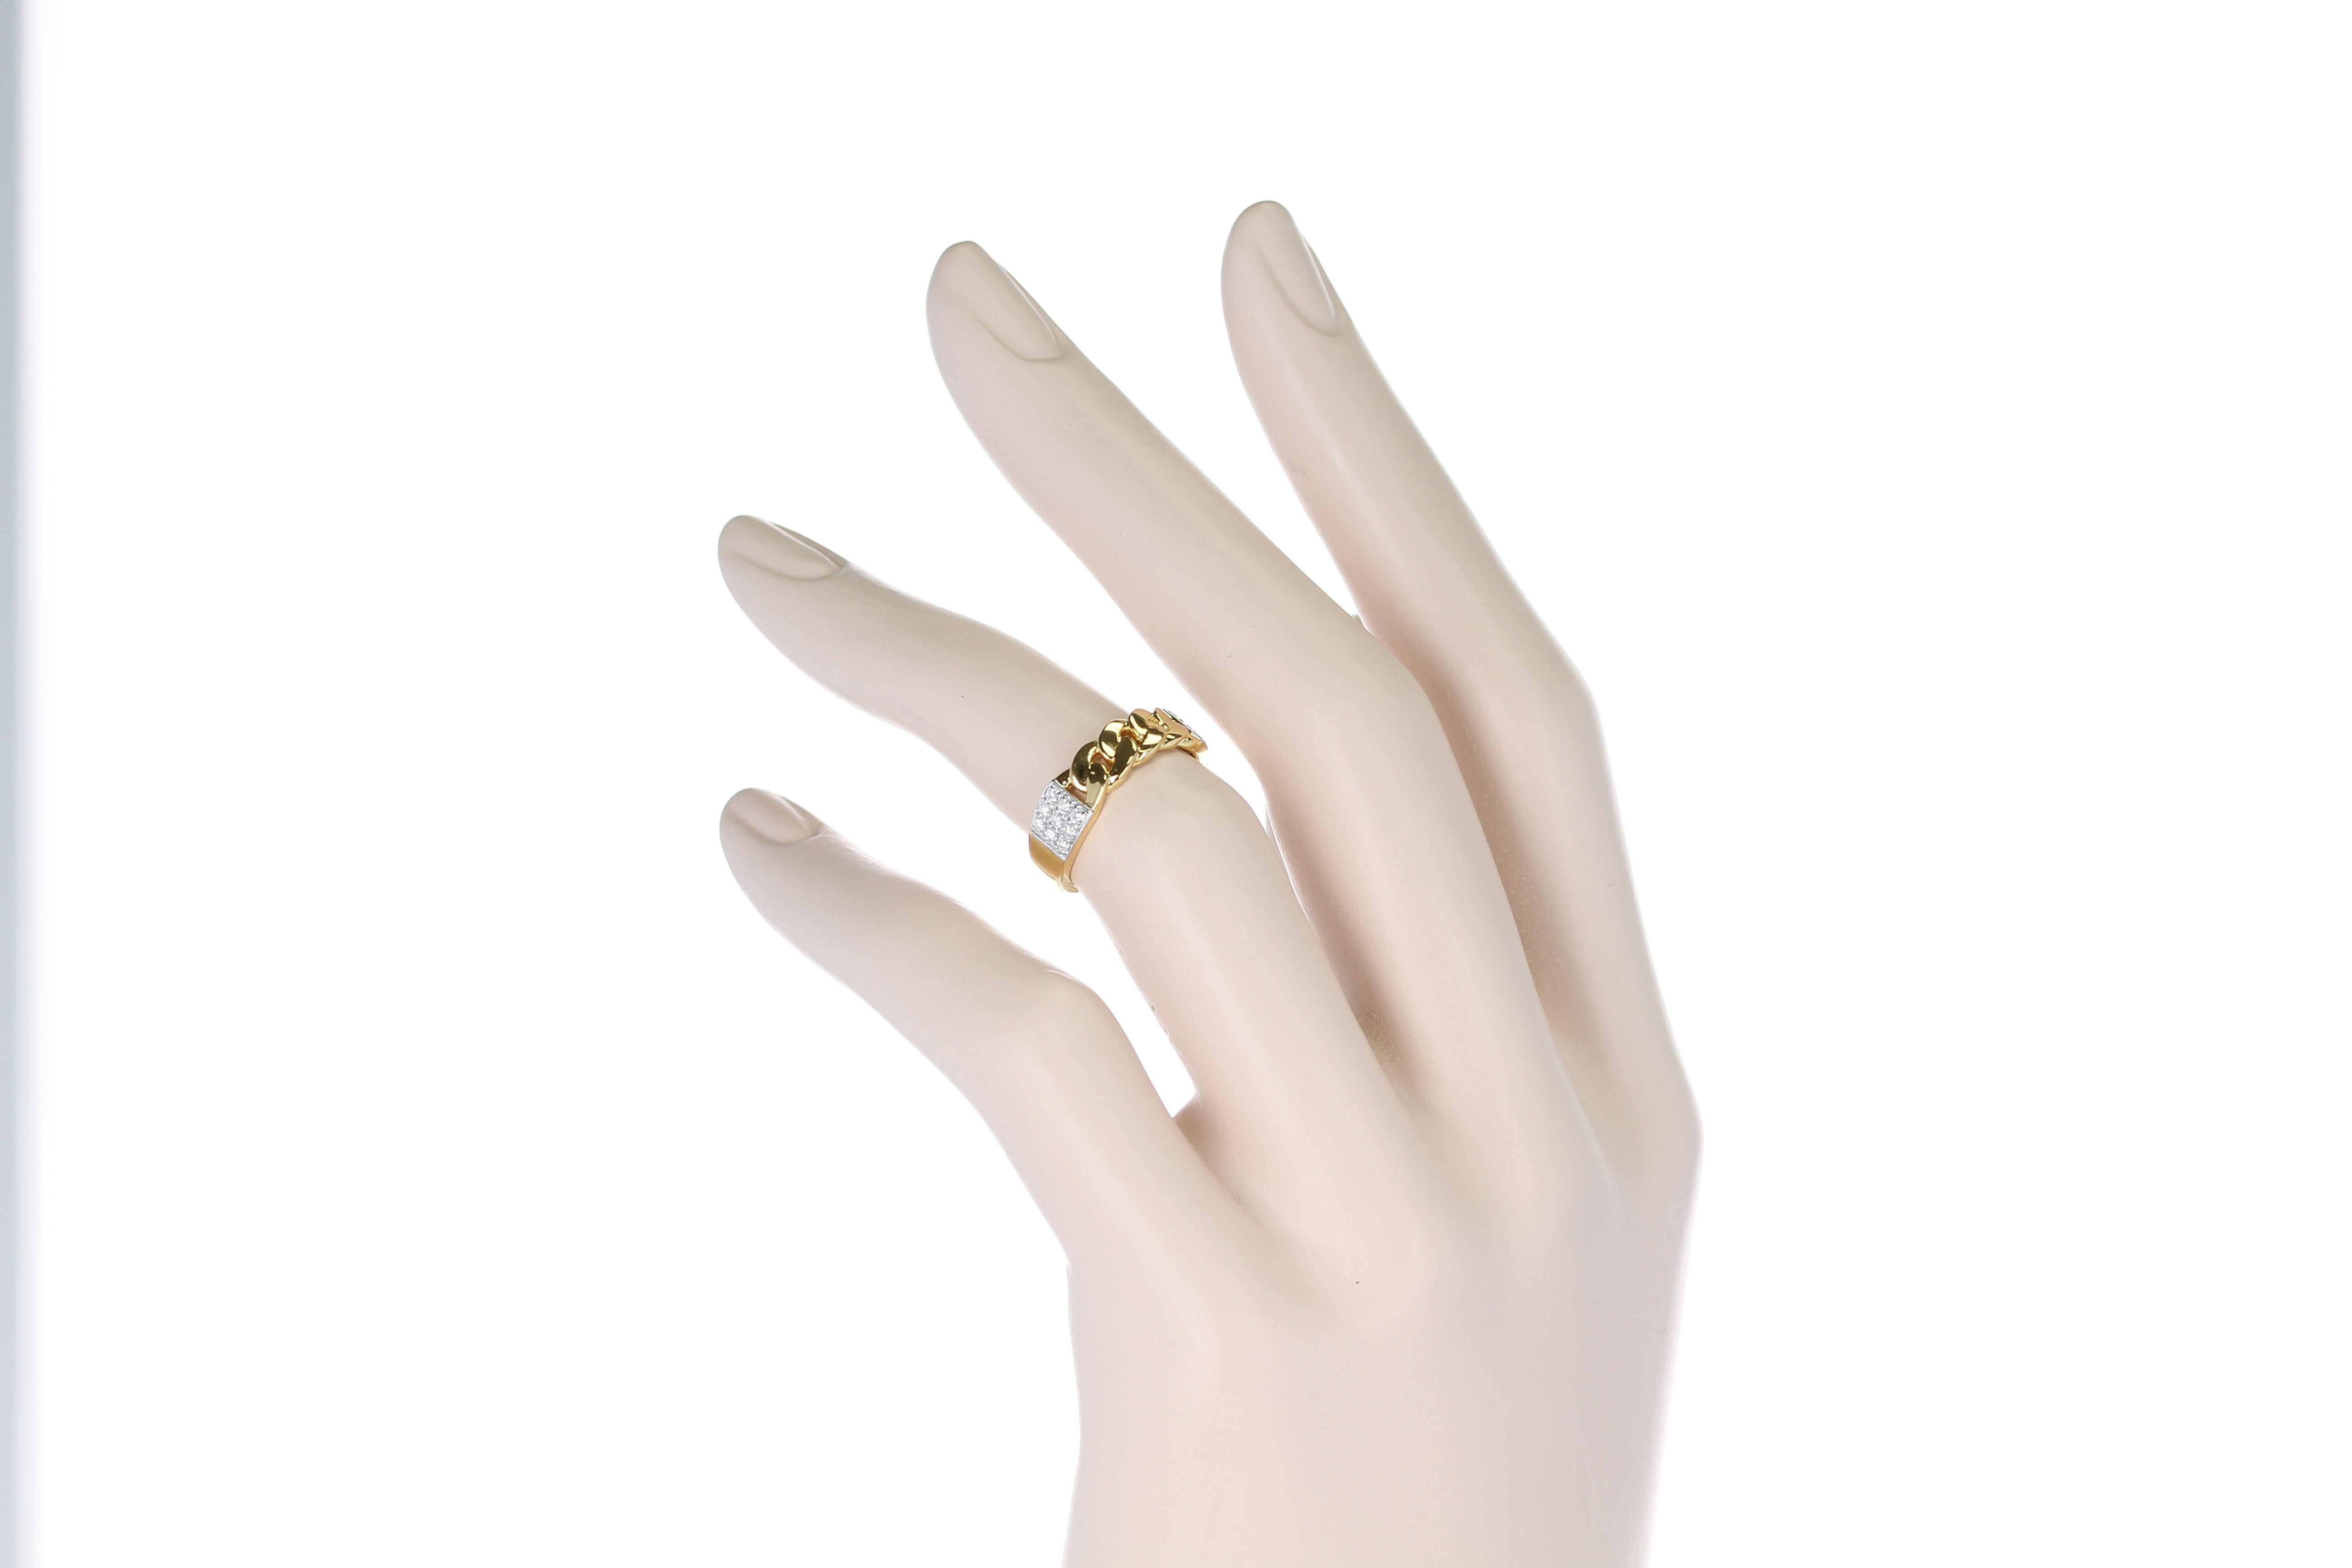 Yellow Gold Rope-Style Ring with Diamonds, 14 Karat 4